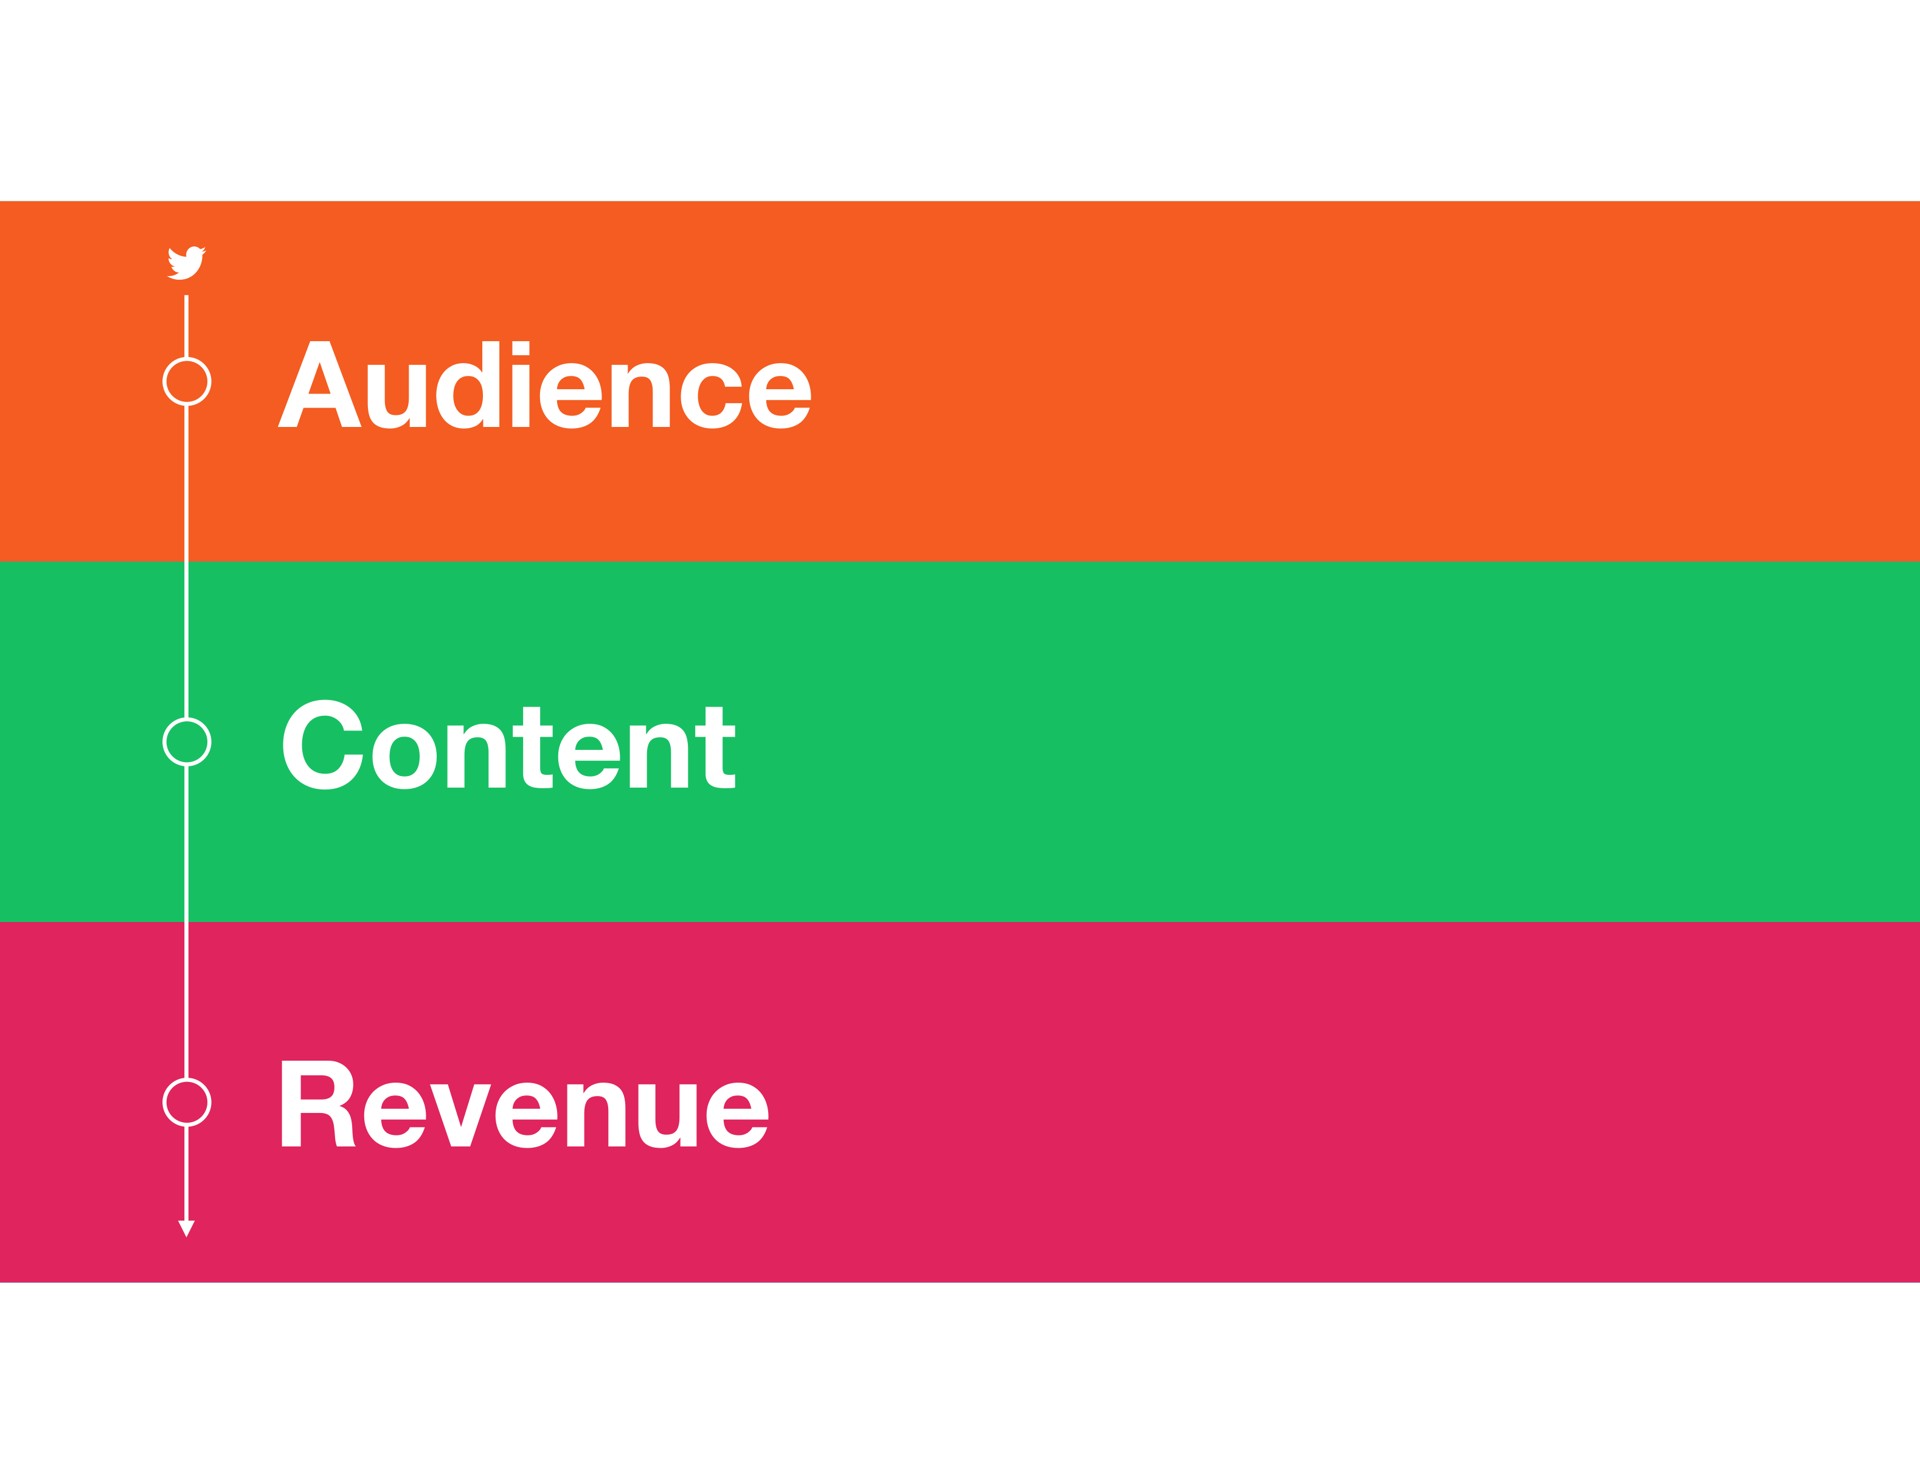 audience content revenue | Twitter